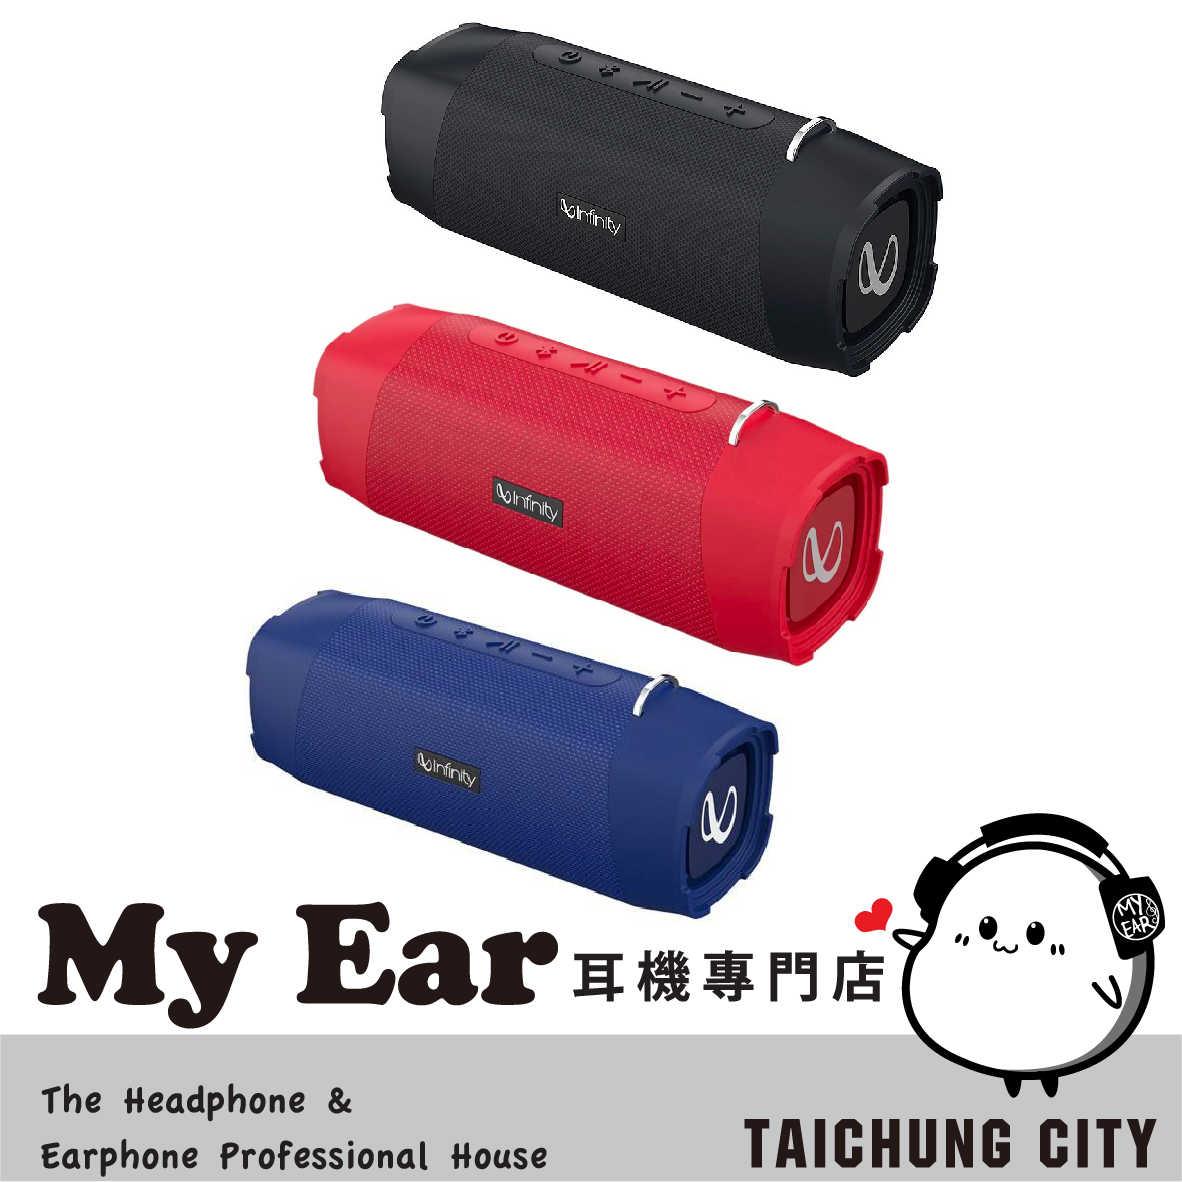 Infinity CLUBZ 750 紅 語音助理 內建行動電源 可攜式 防水 藍牙喇叭 | My Ear 耳機專門店